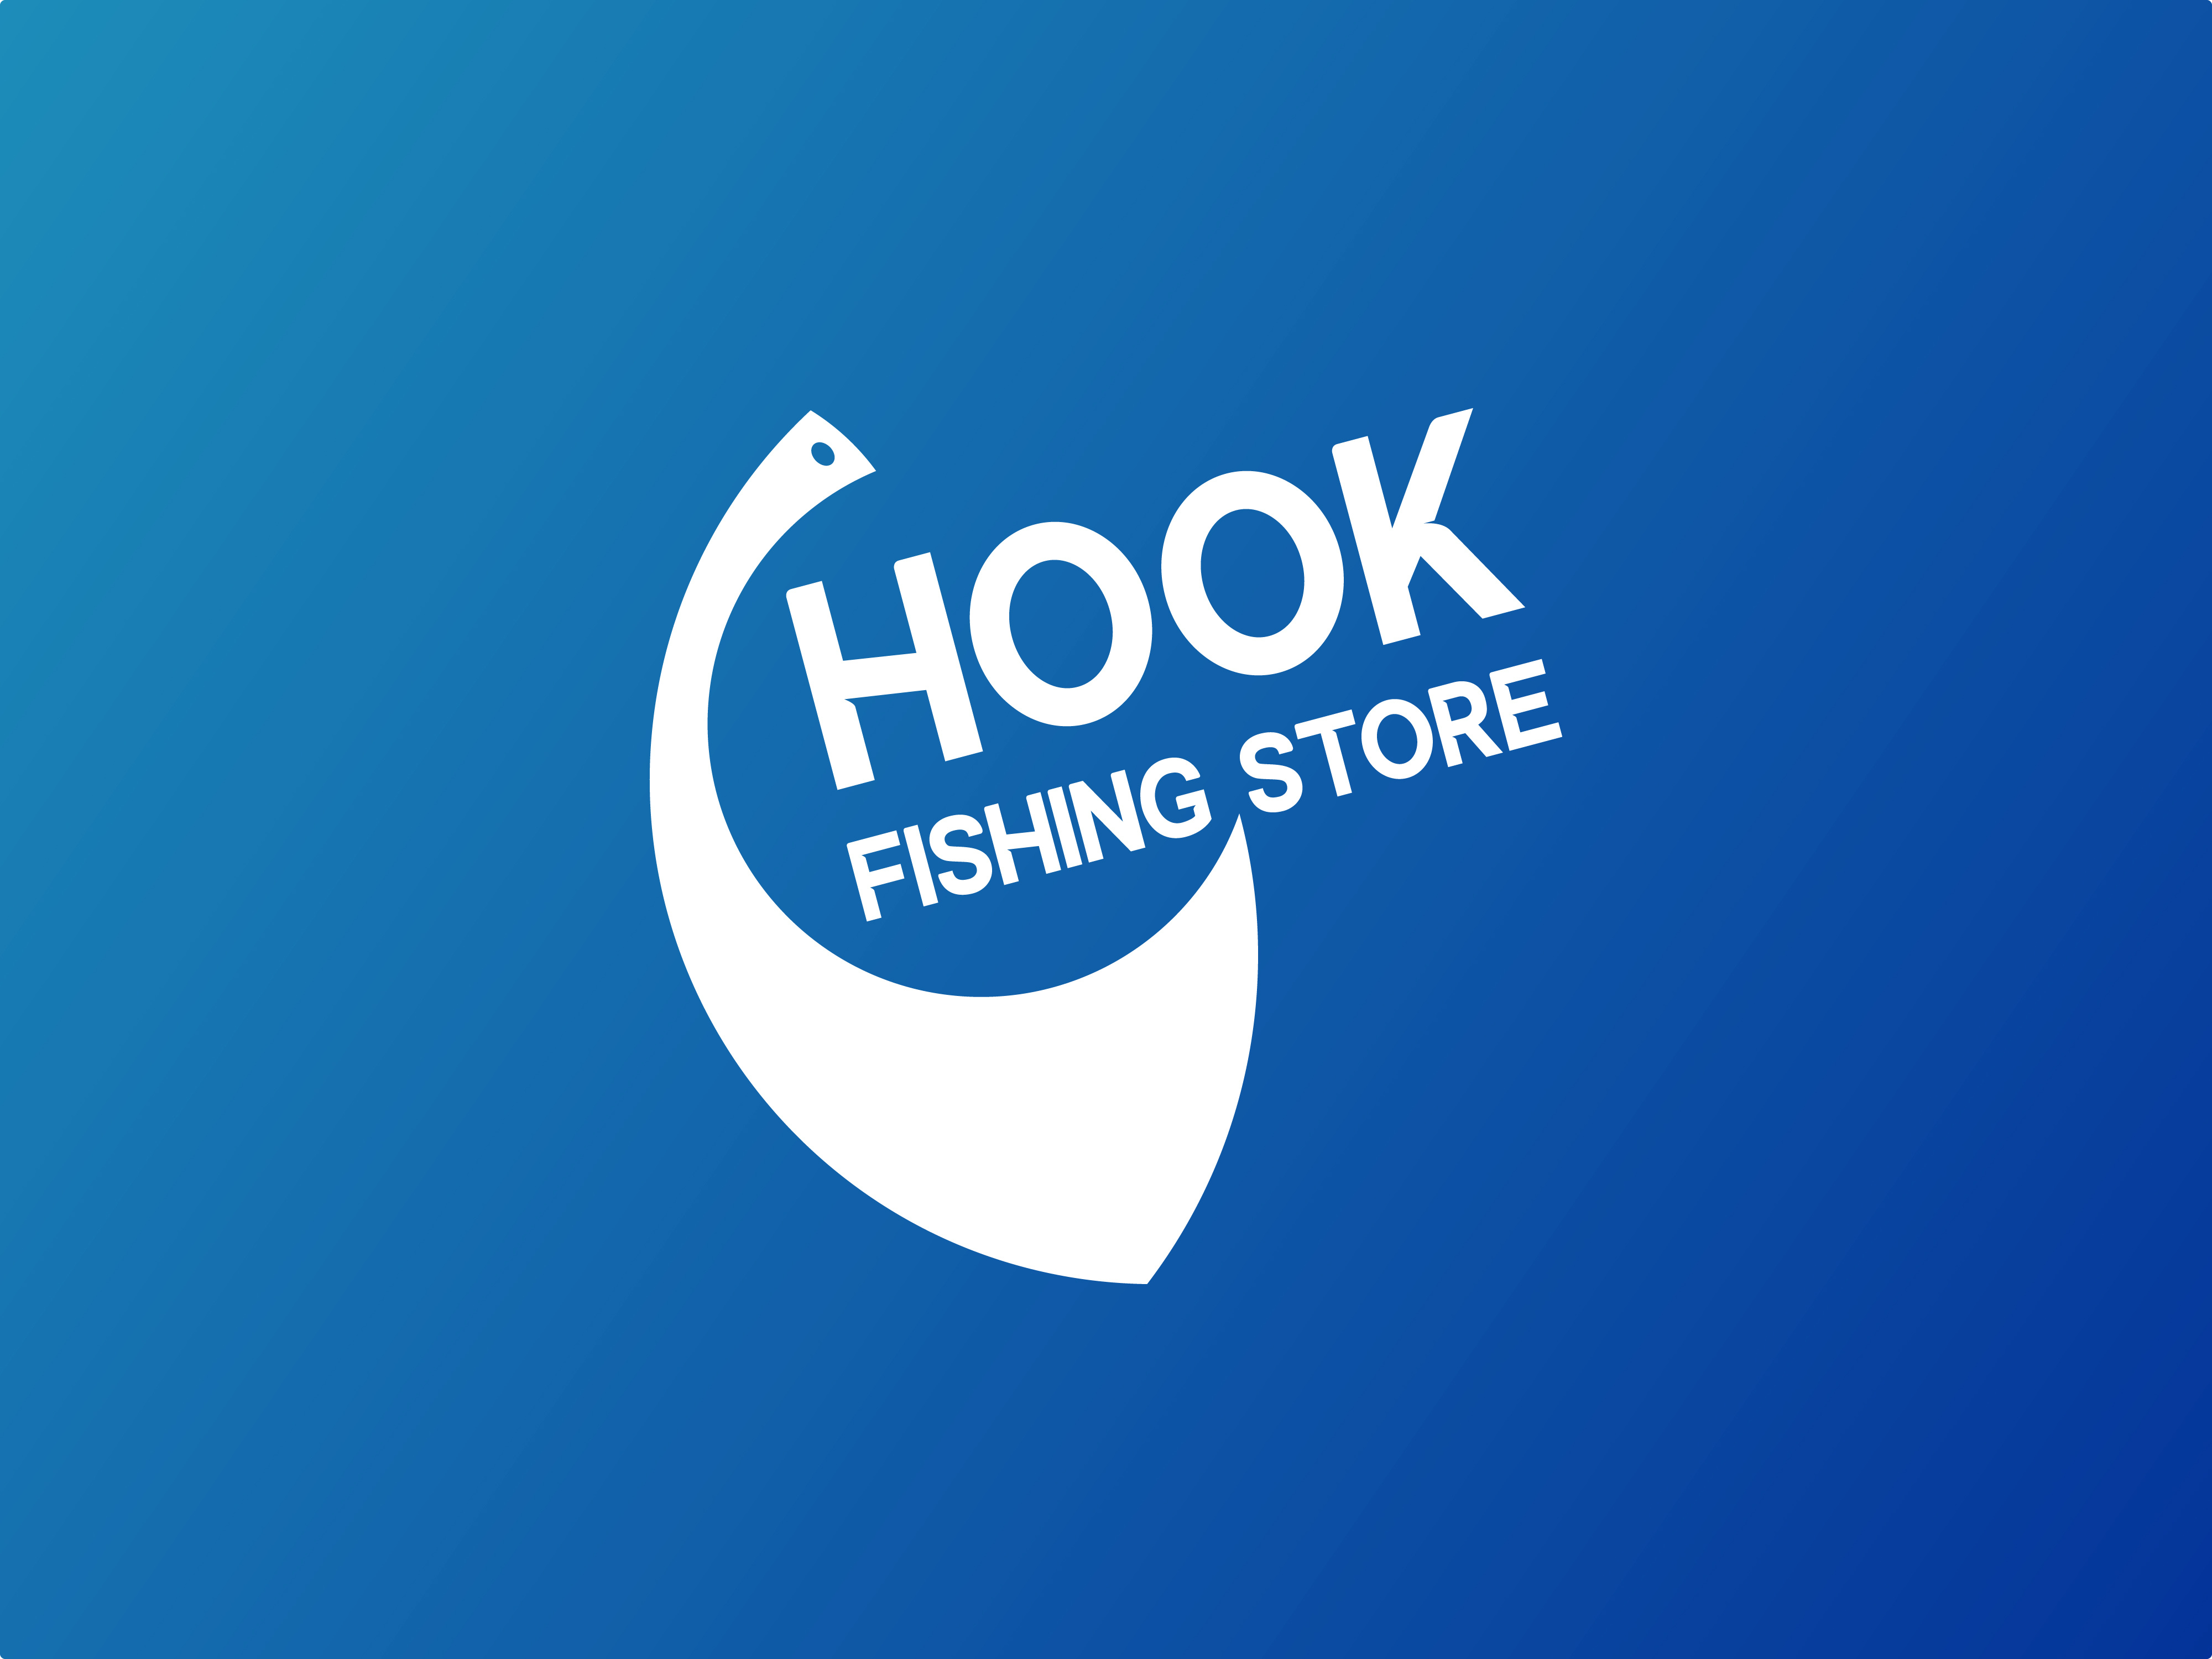 HOOK Fishing Store Logo design Concept by Aram Madatyan on Dribbble